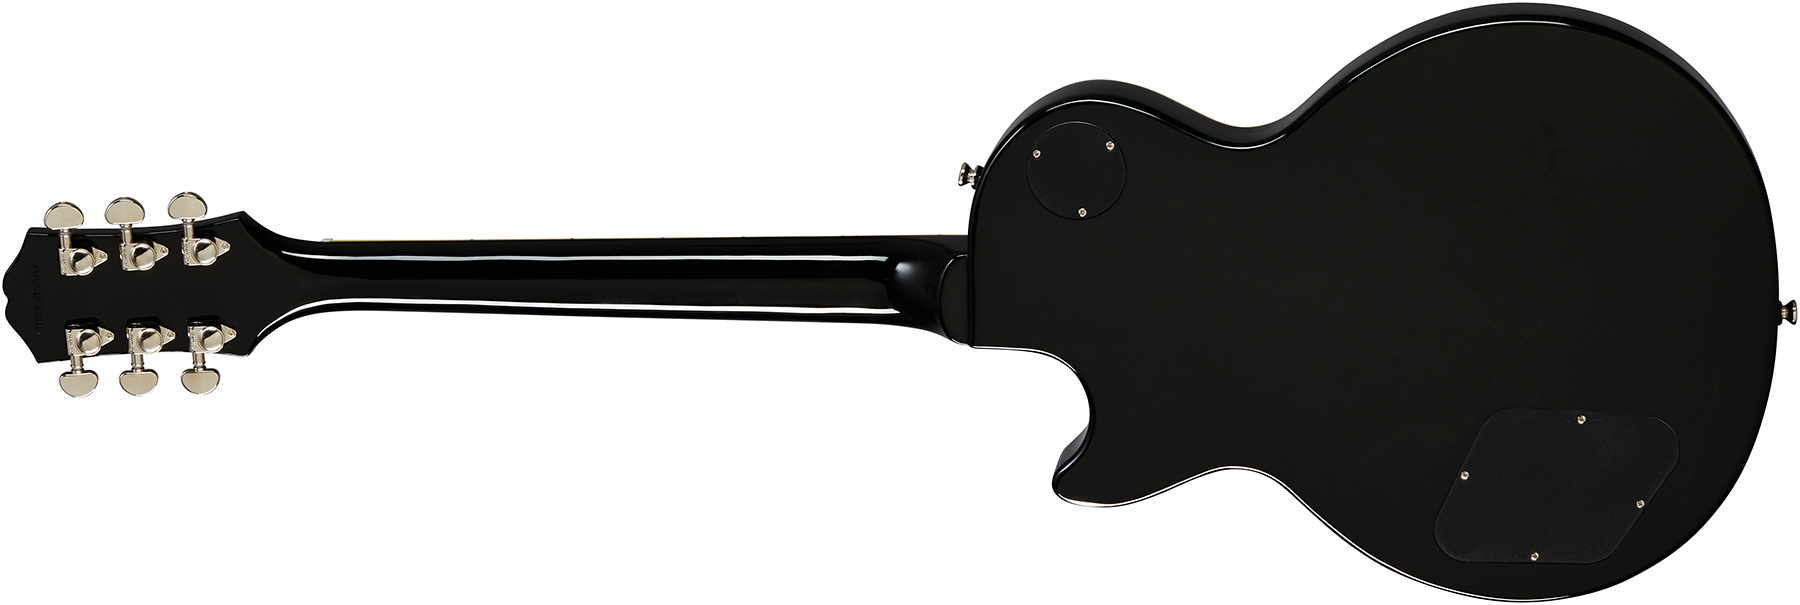 Epiphone Les Paul Standard 60s 2h Ht Rw - Ebony - Single cut electric guitar - Variation 1